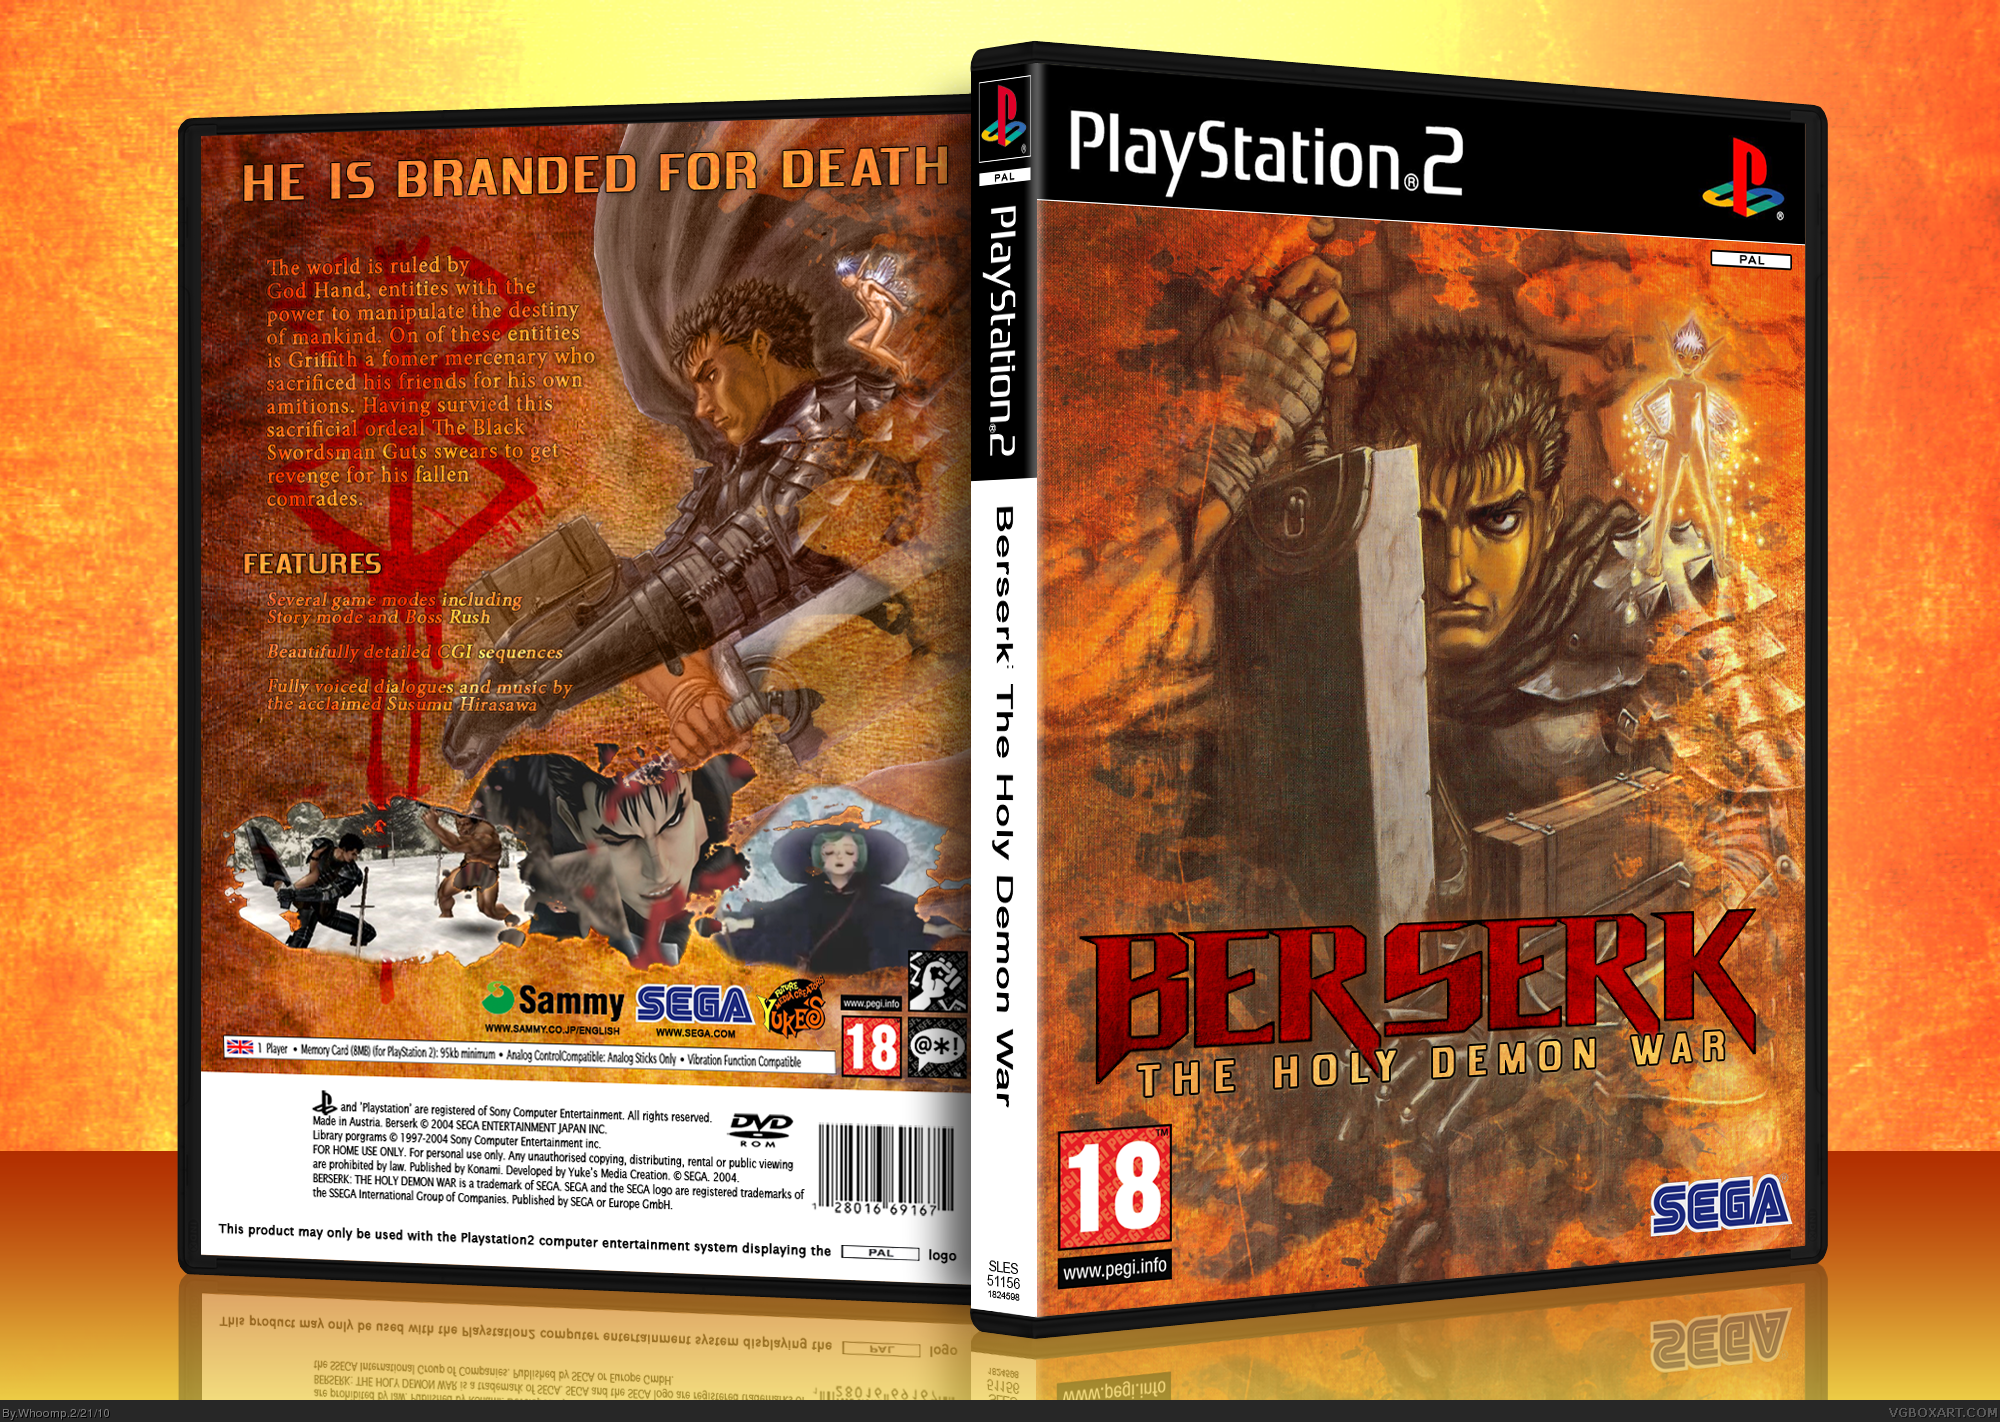 Berserk: The Holy Demon War box cover